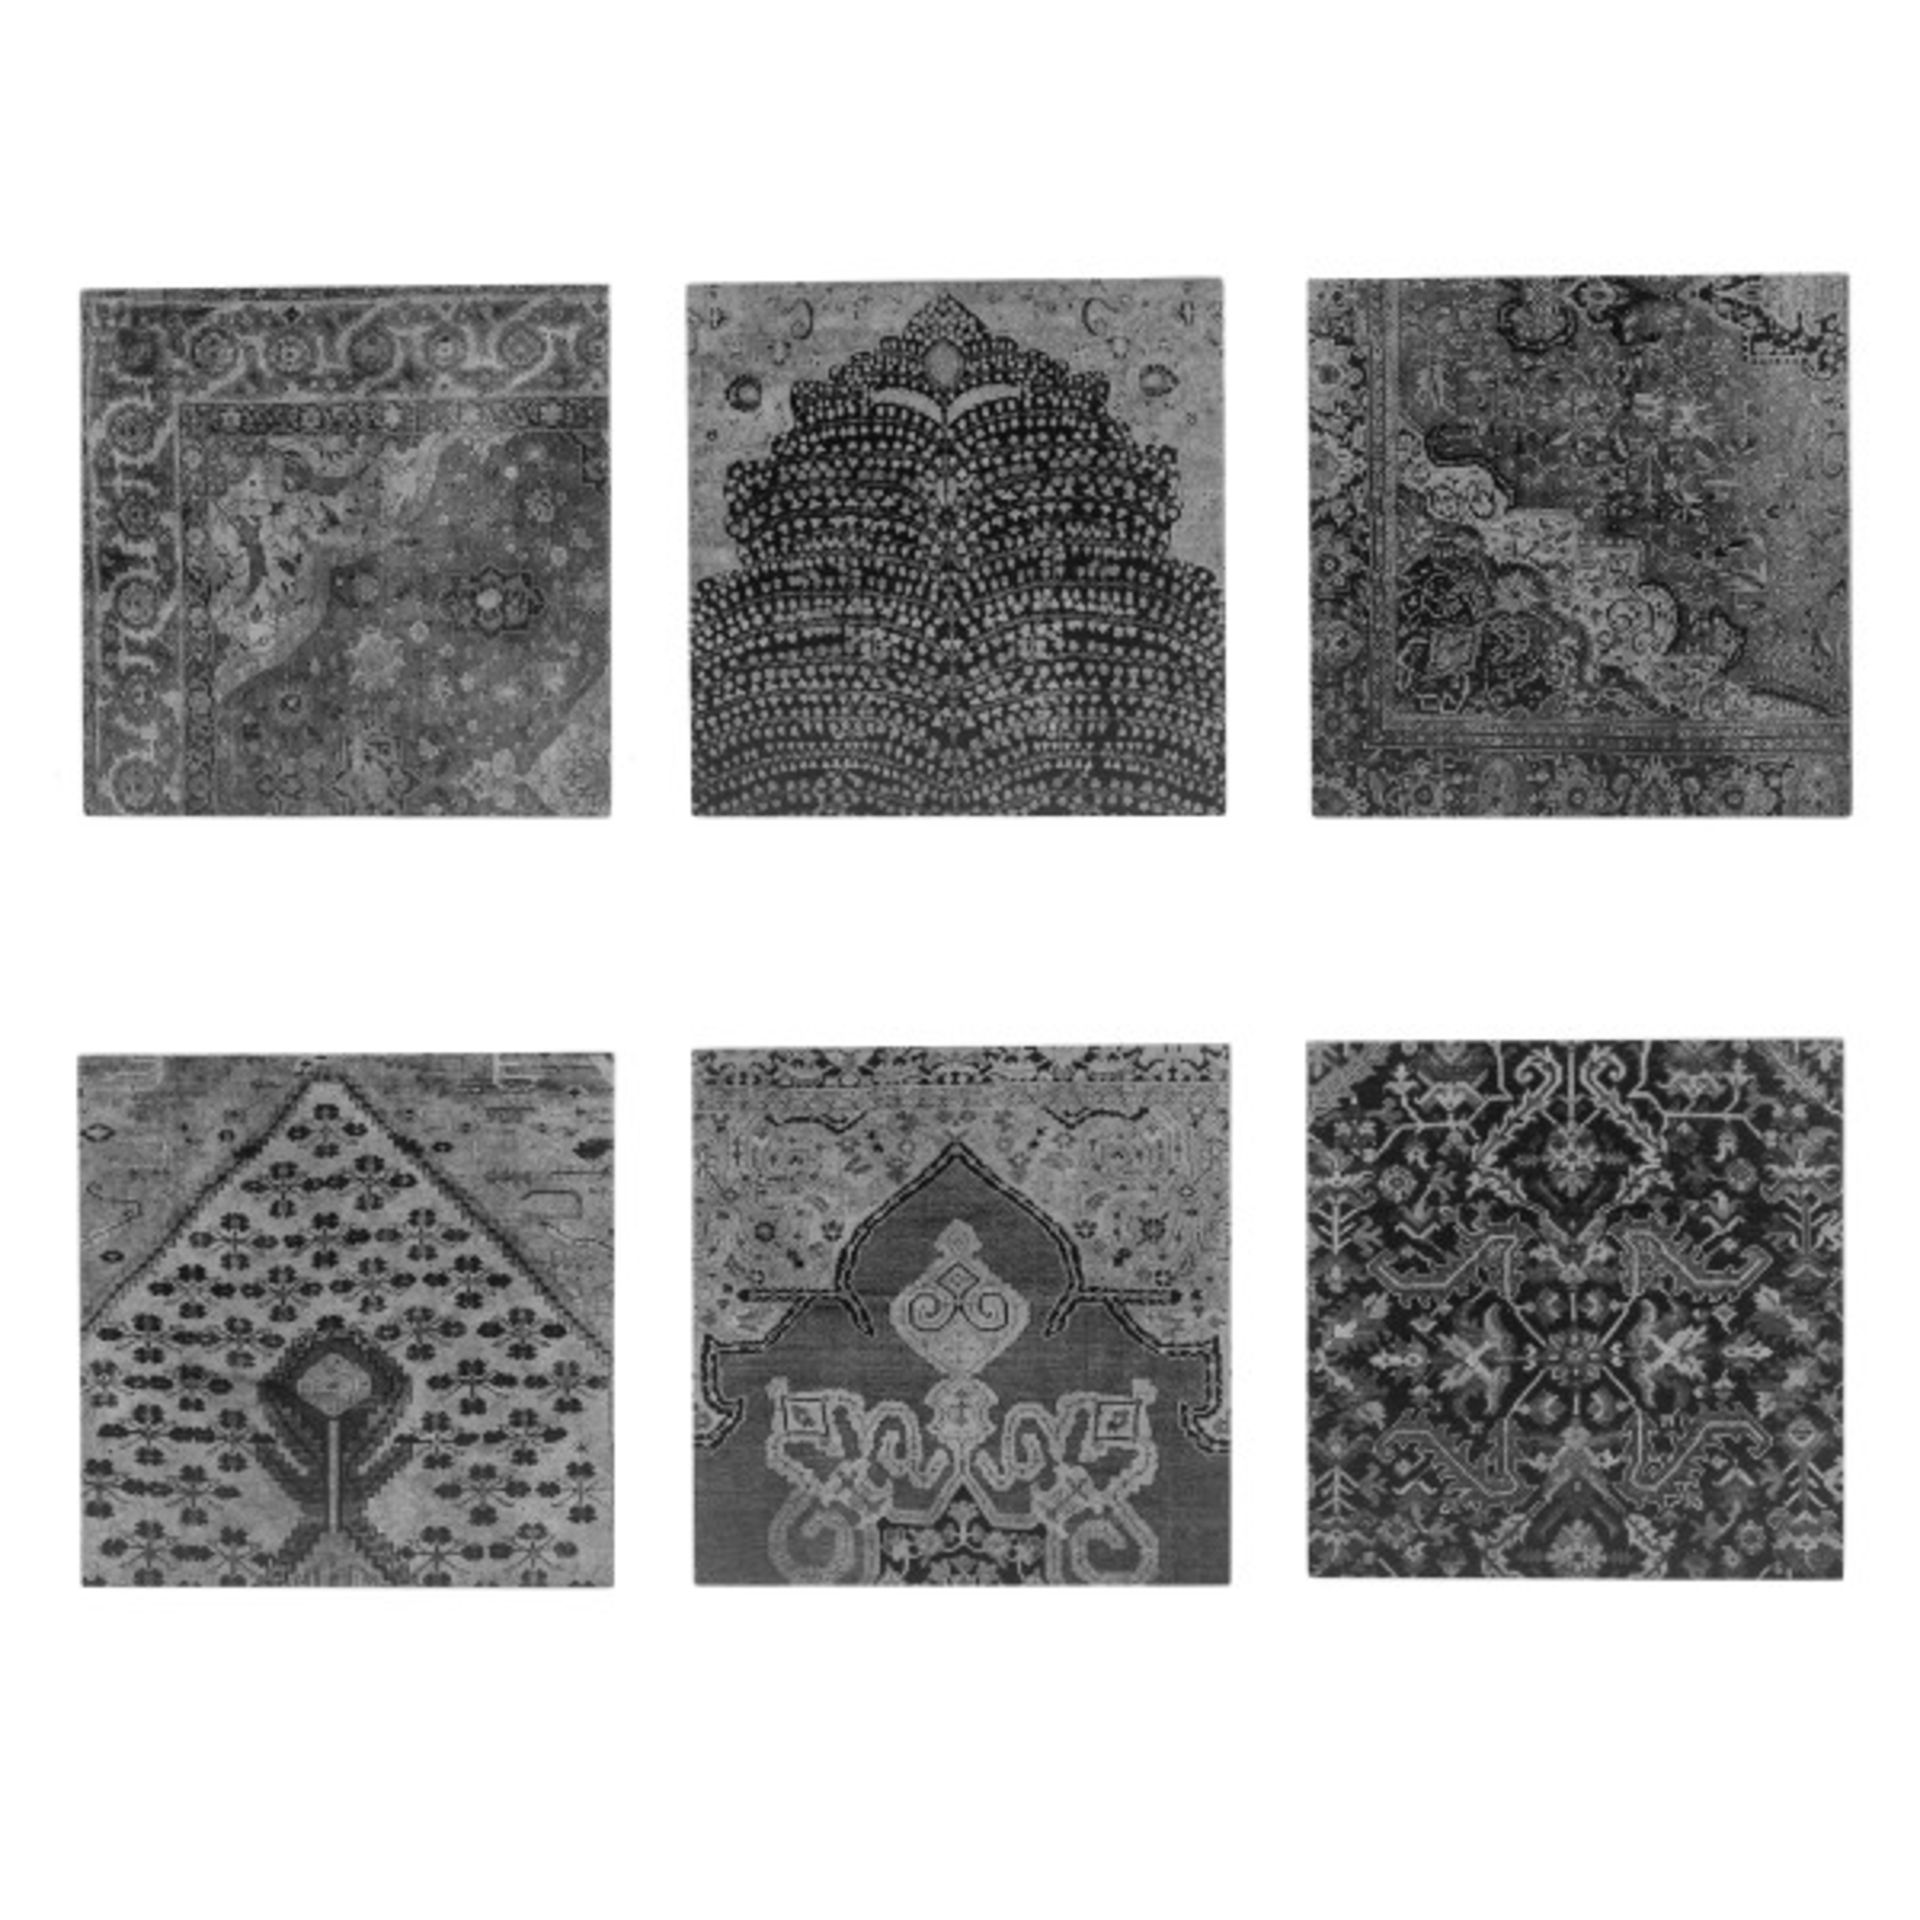 Coup & Co Art Persian Persian Carpet Wall Tiles Black & White Set of 6 35.1 x 4.6 x 35.1 cm Coup &